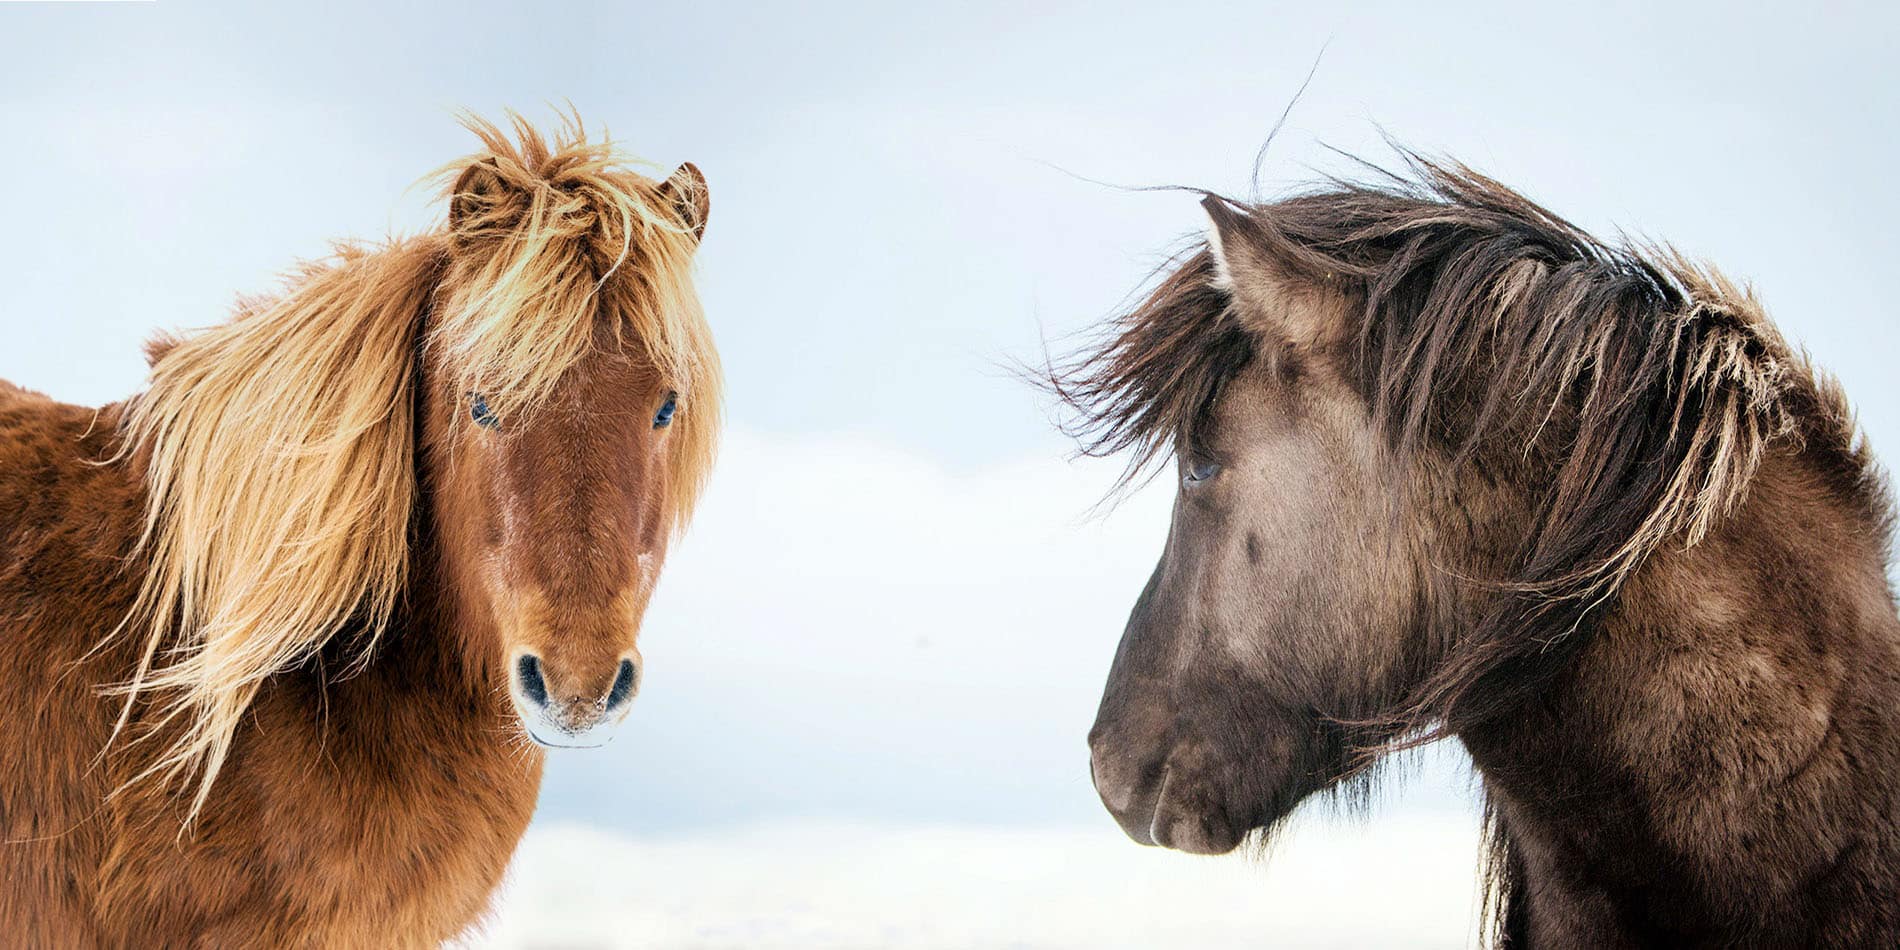 Sable Island horses